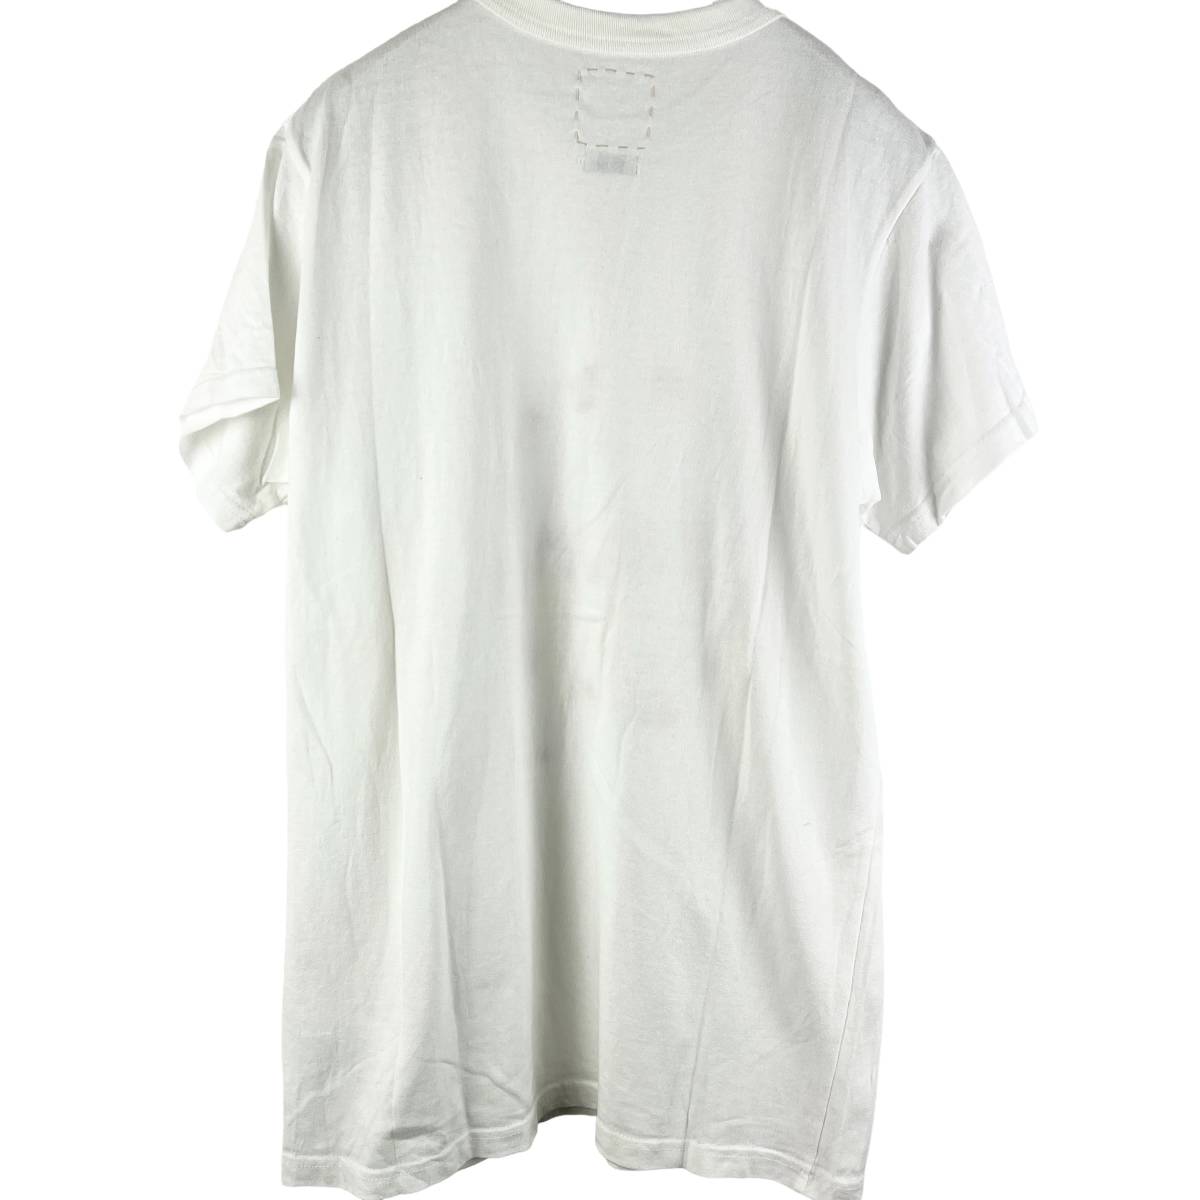 VISVIM(ビズビム) Circle VSVM 260 T Shirt (white)